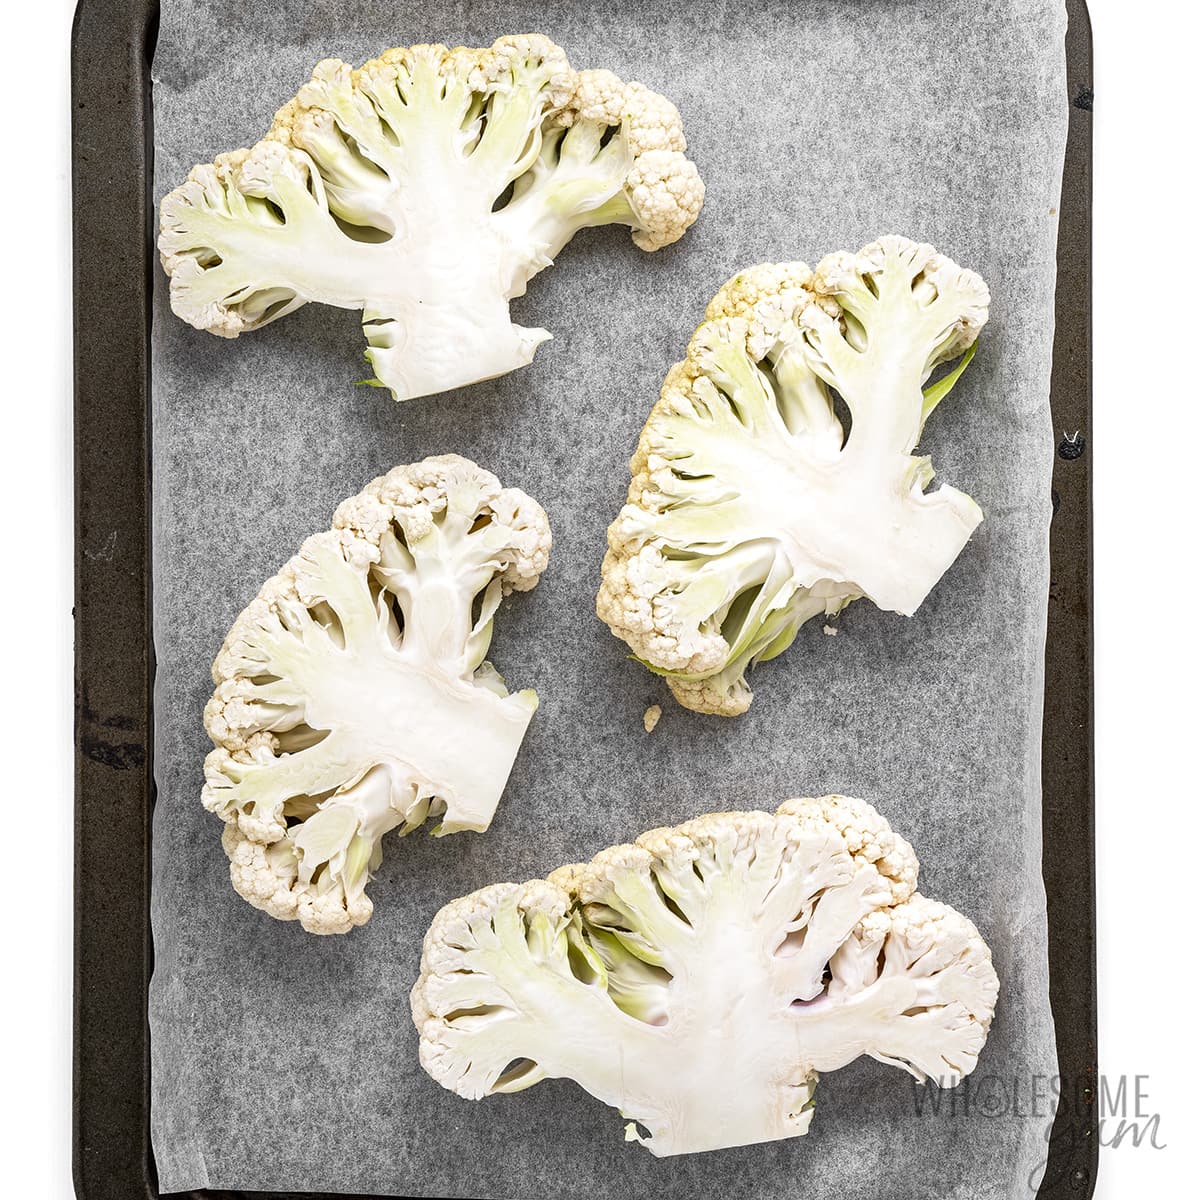 Sliced cauliflower on a baking sheet.